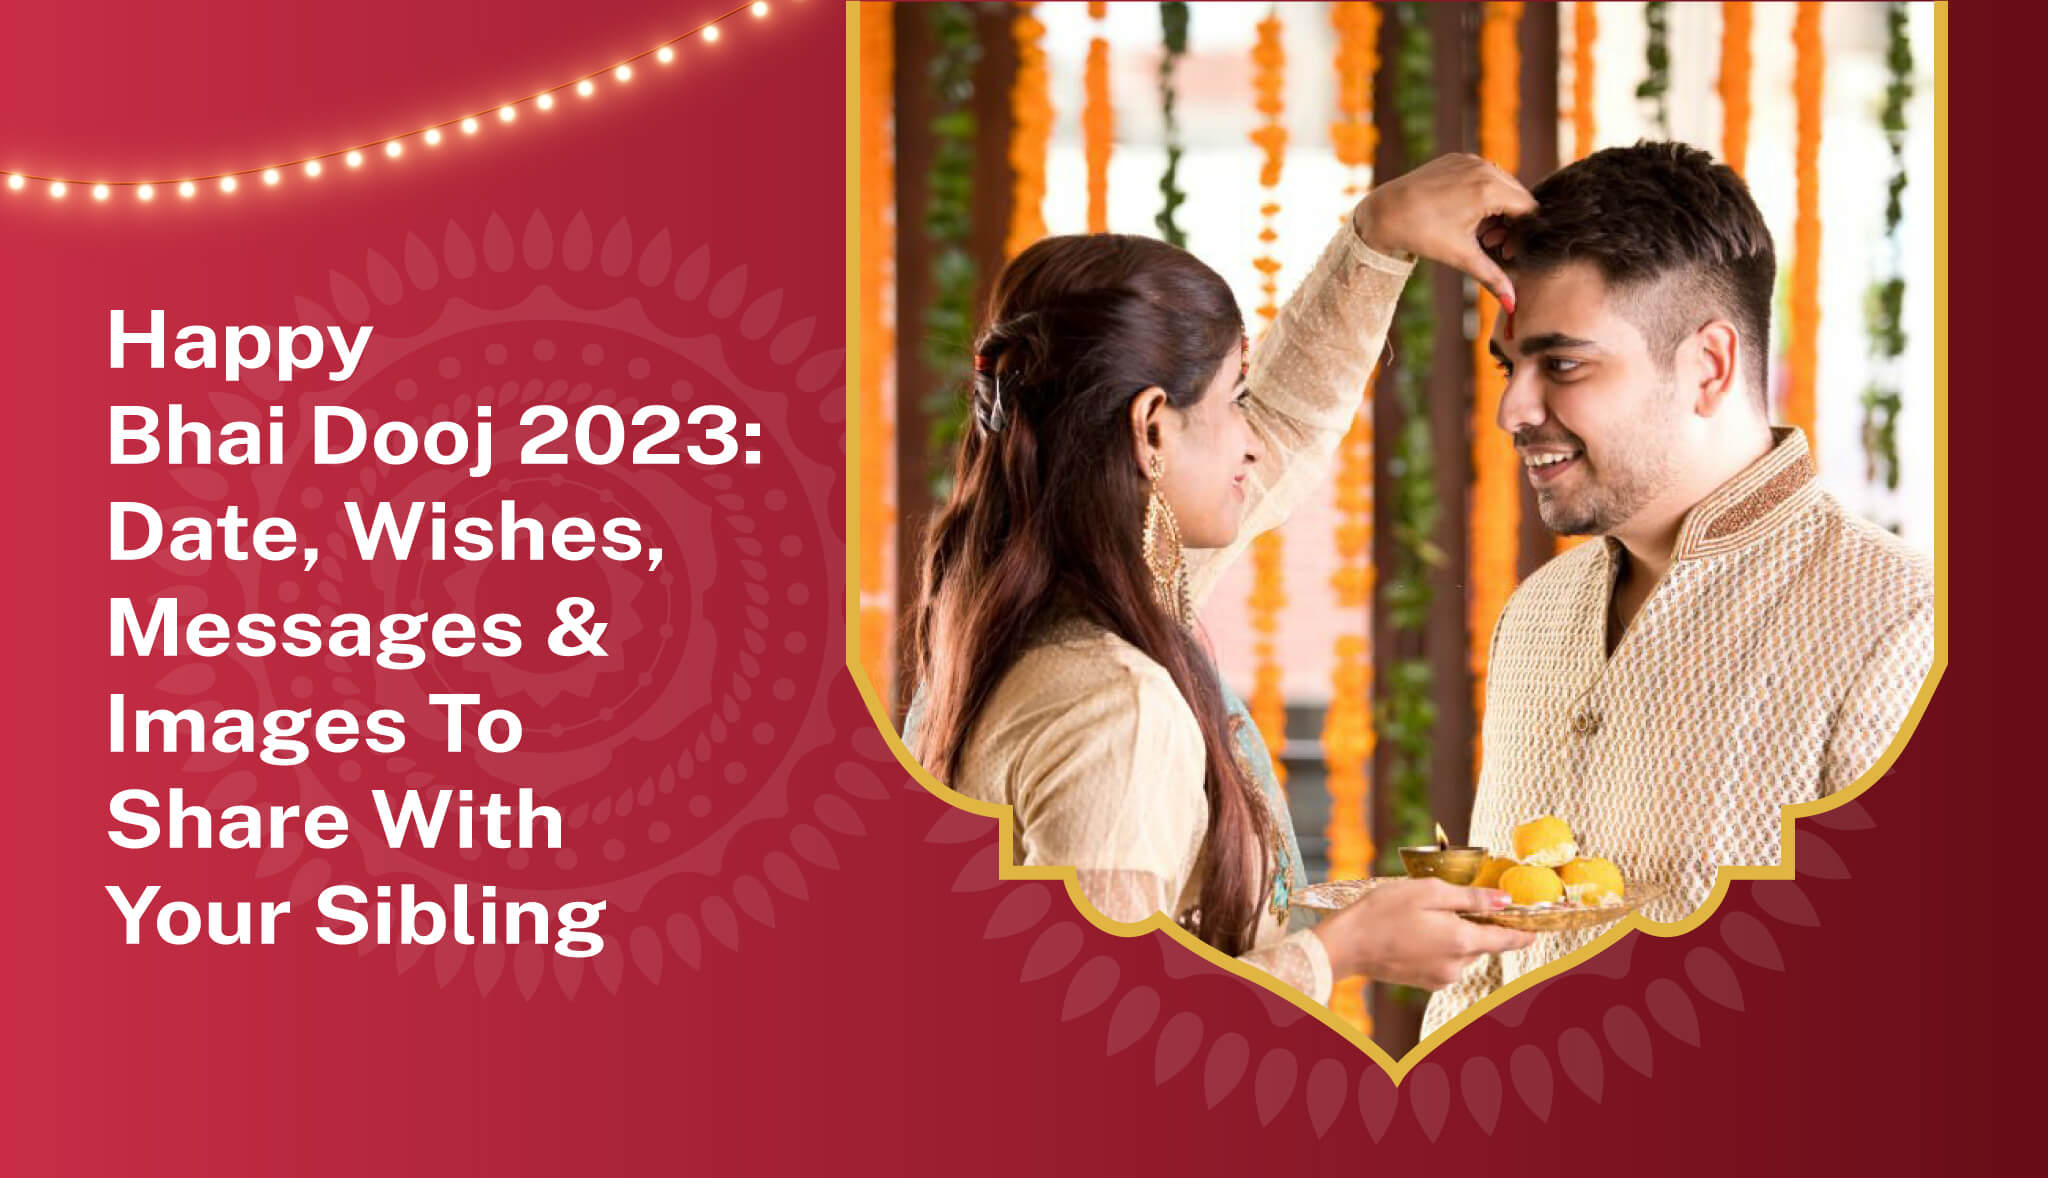 Unique greetings and creative images to wish Bhai Dooj 2023 - Postive